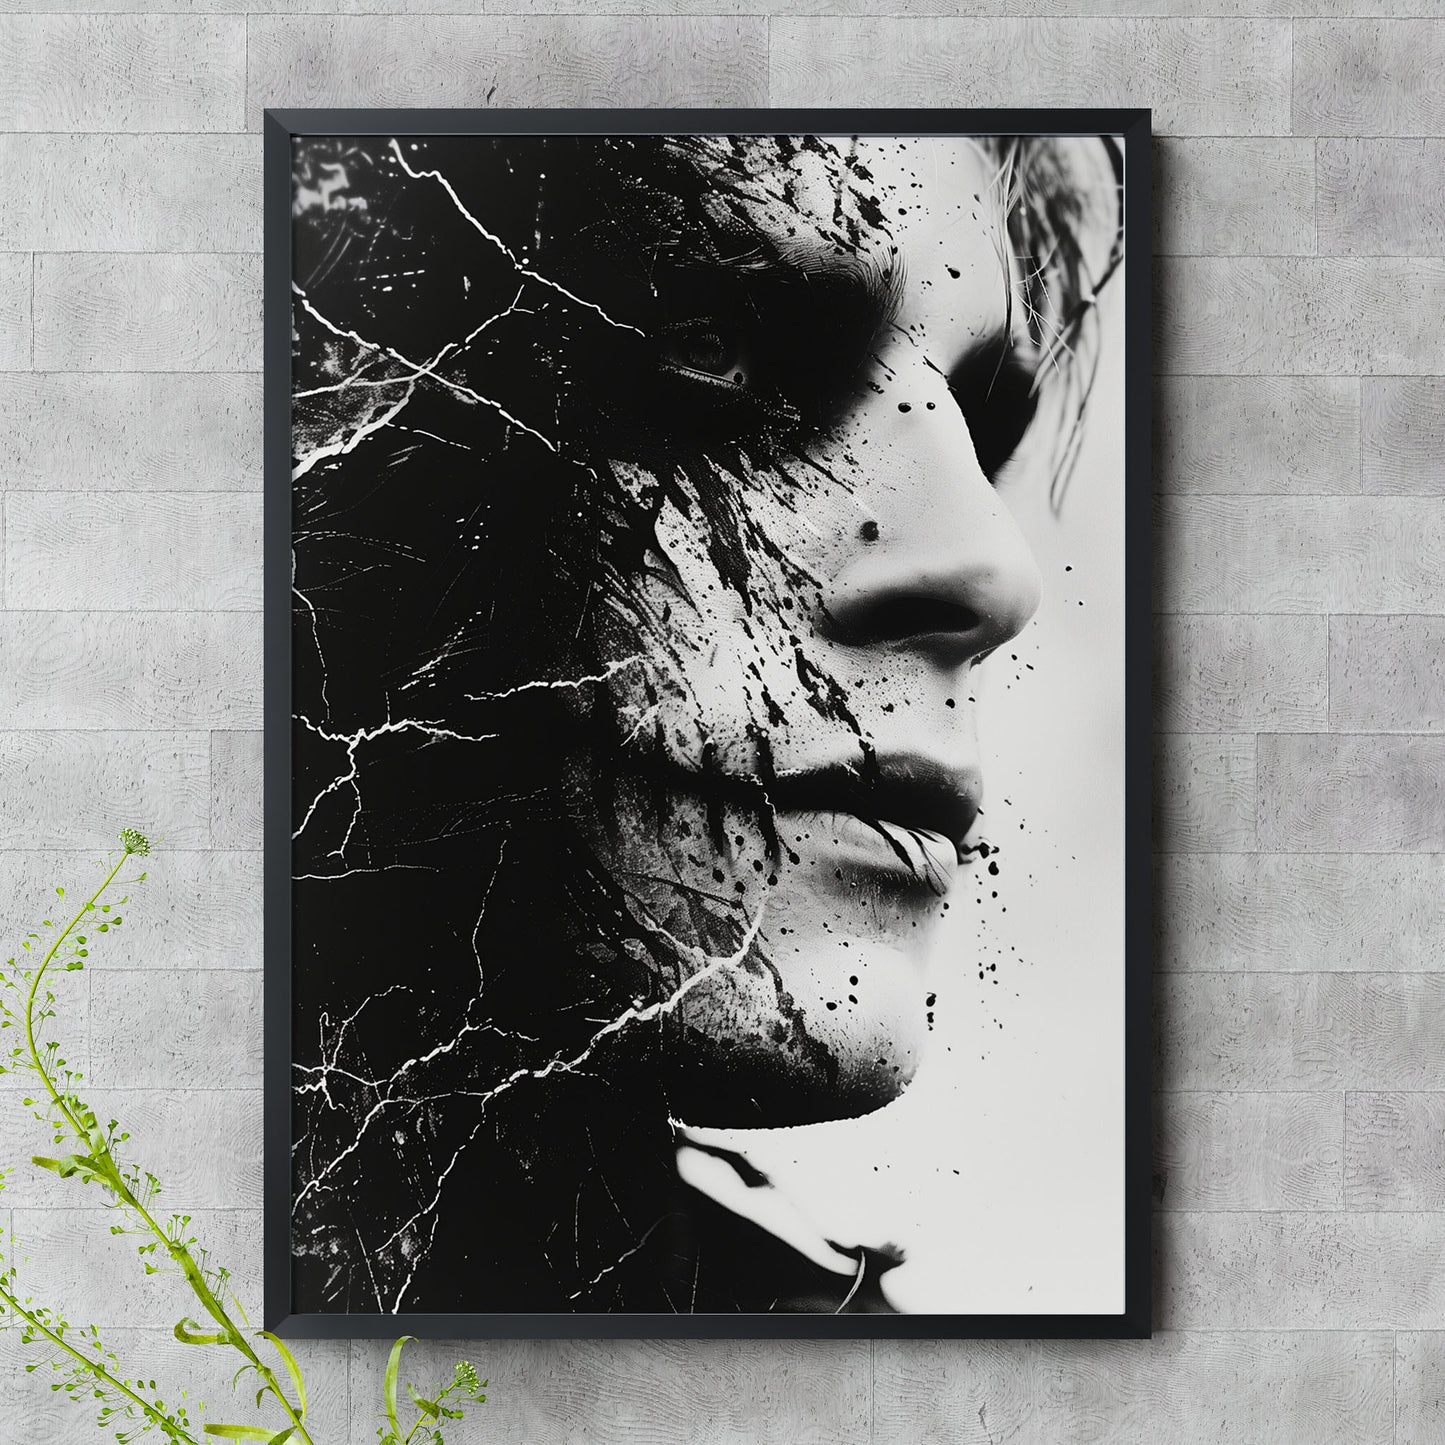 Gothic Black and White Vampire Portrait Print - Unique Home Decor Poster